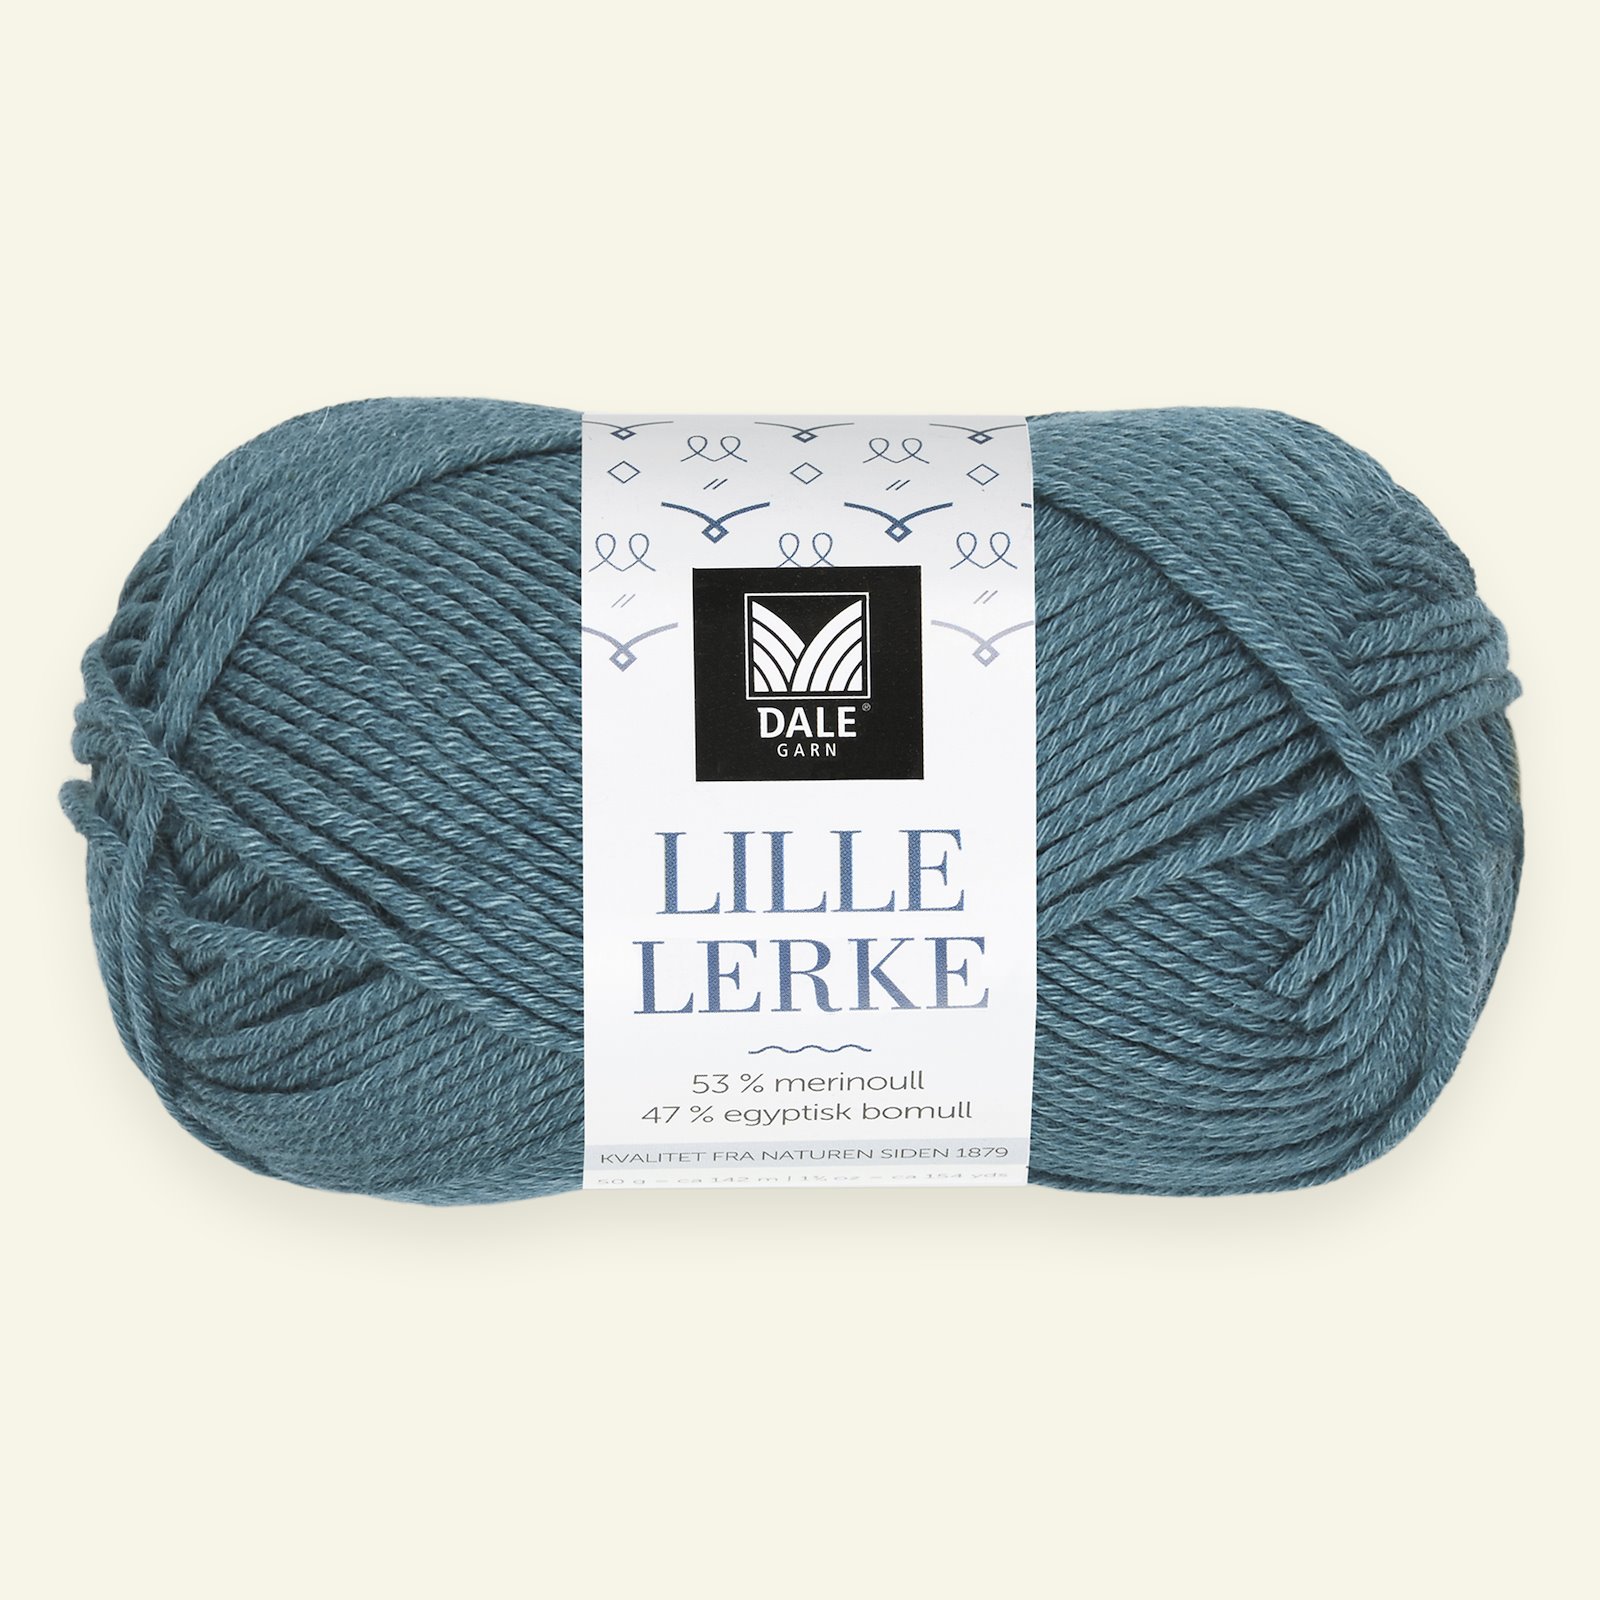 klinke skole træk uld over øjnene Dale Garn, merino/cotton yarn "Lille Lerke", dark petrol | Selfmade®  /Stoff&Stil